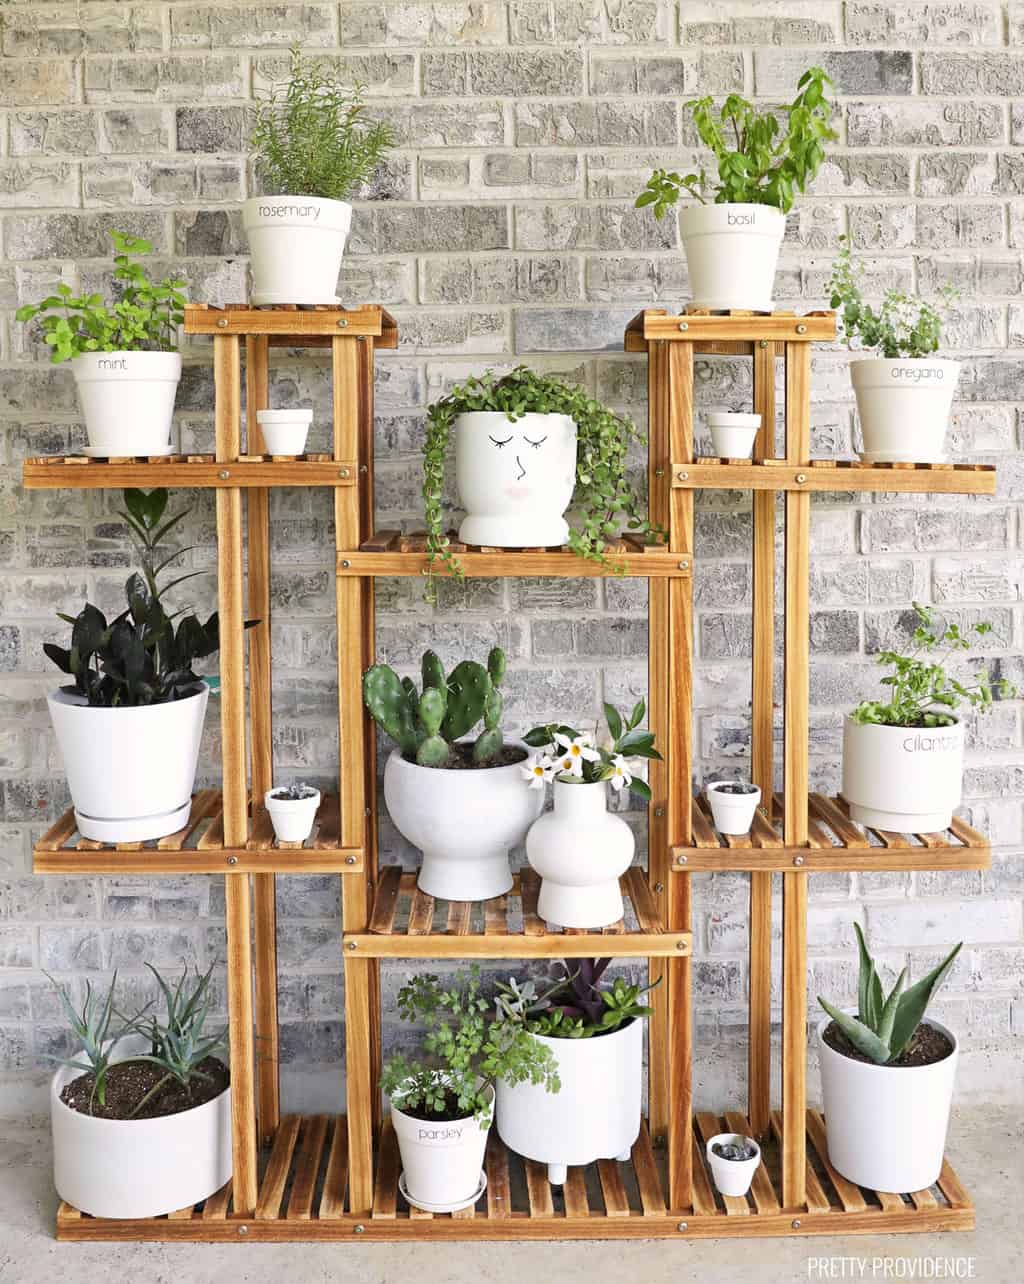 Vertical herb garden on plant shelf in white pots